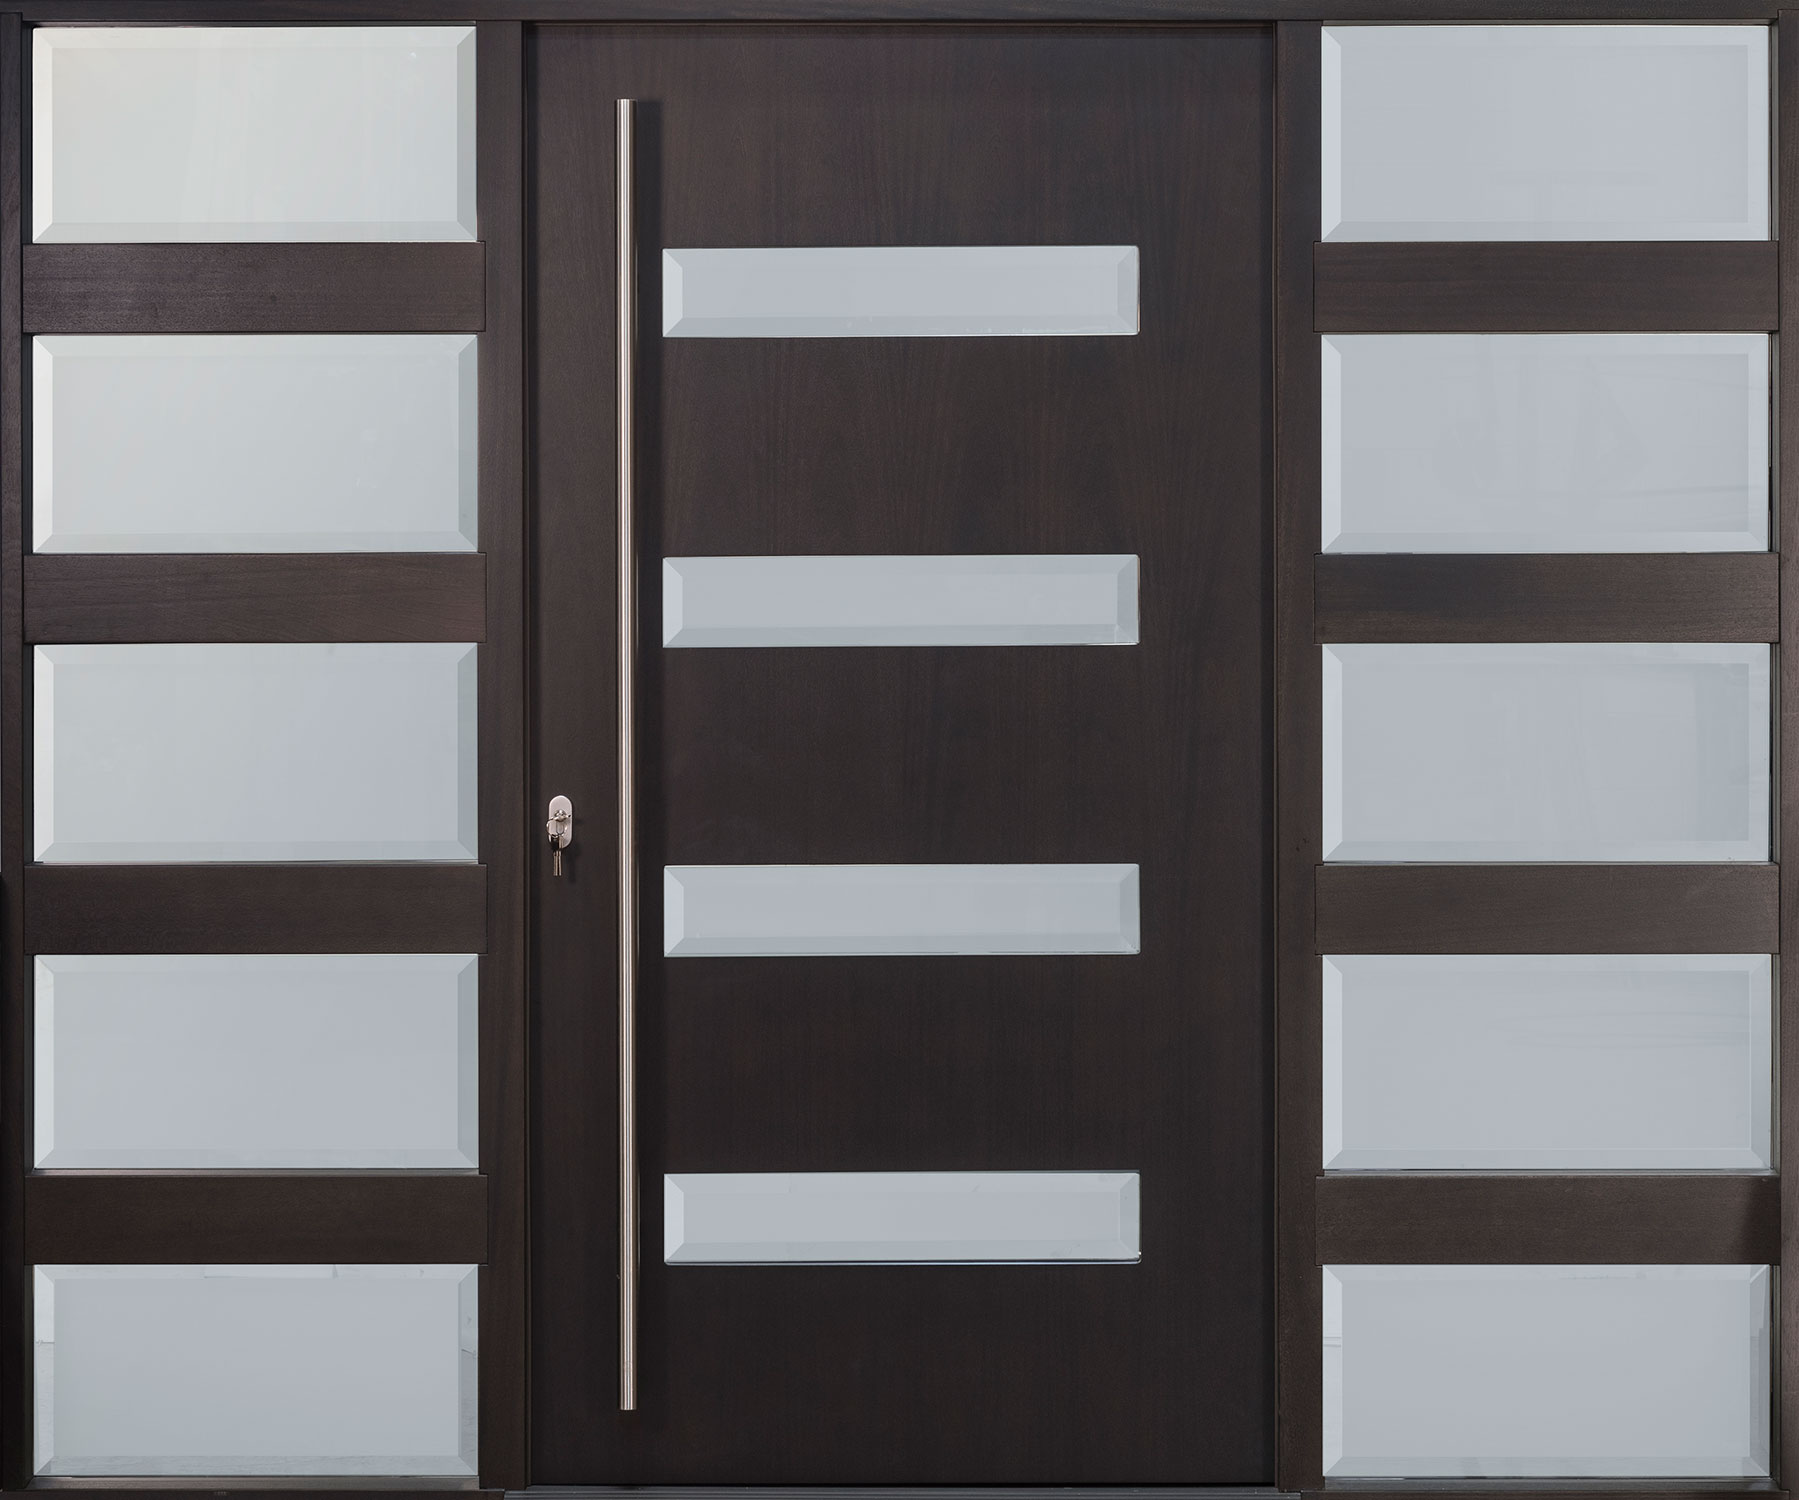 Mahogany Wood Veneer Solid Wood Front Entry Door - Single with 2 Sidelites